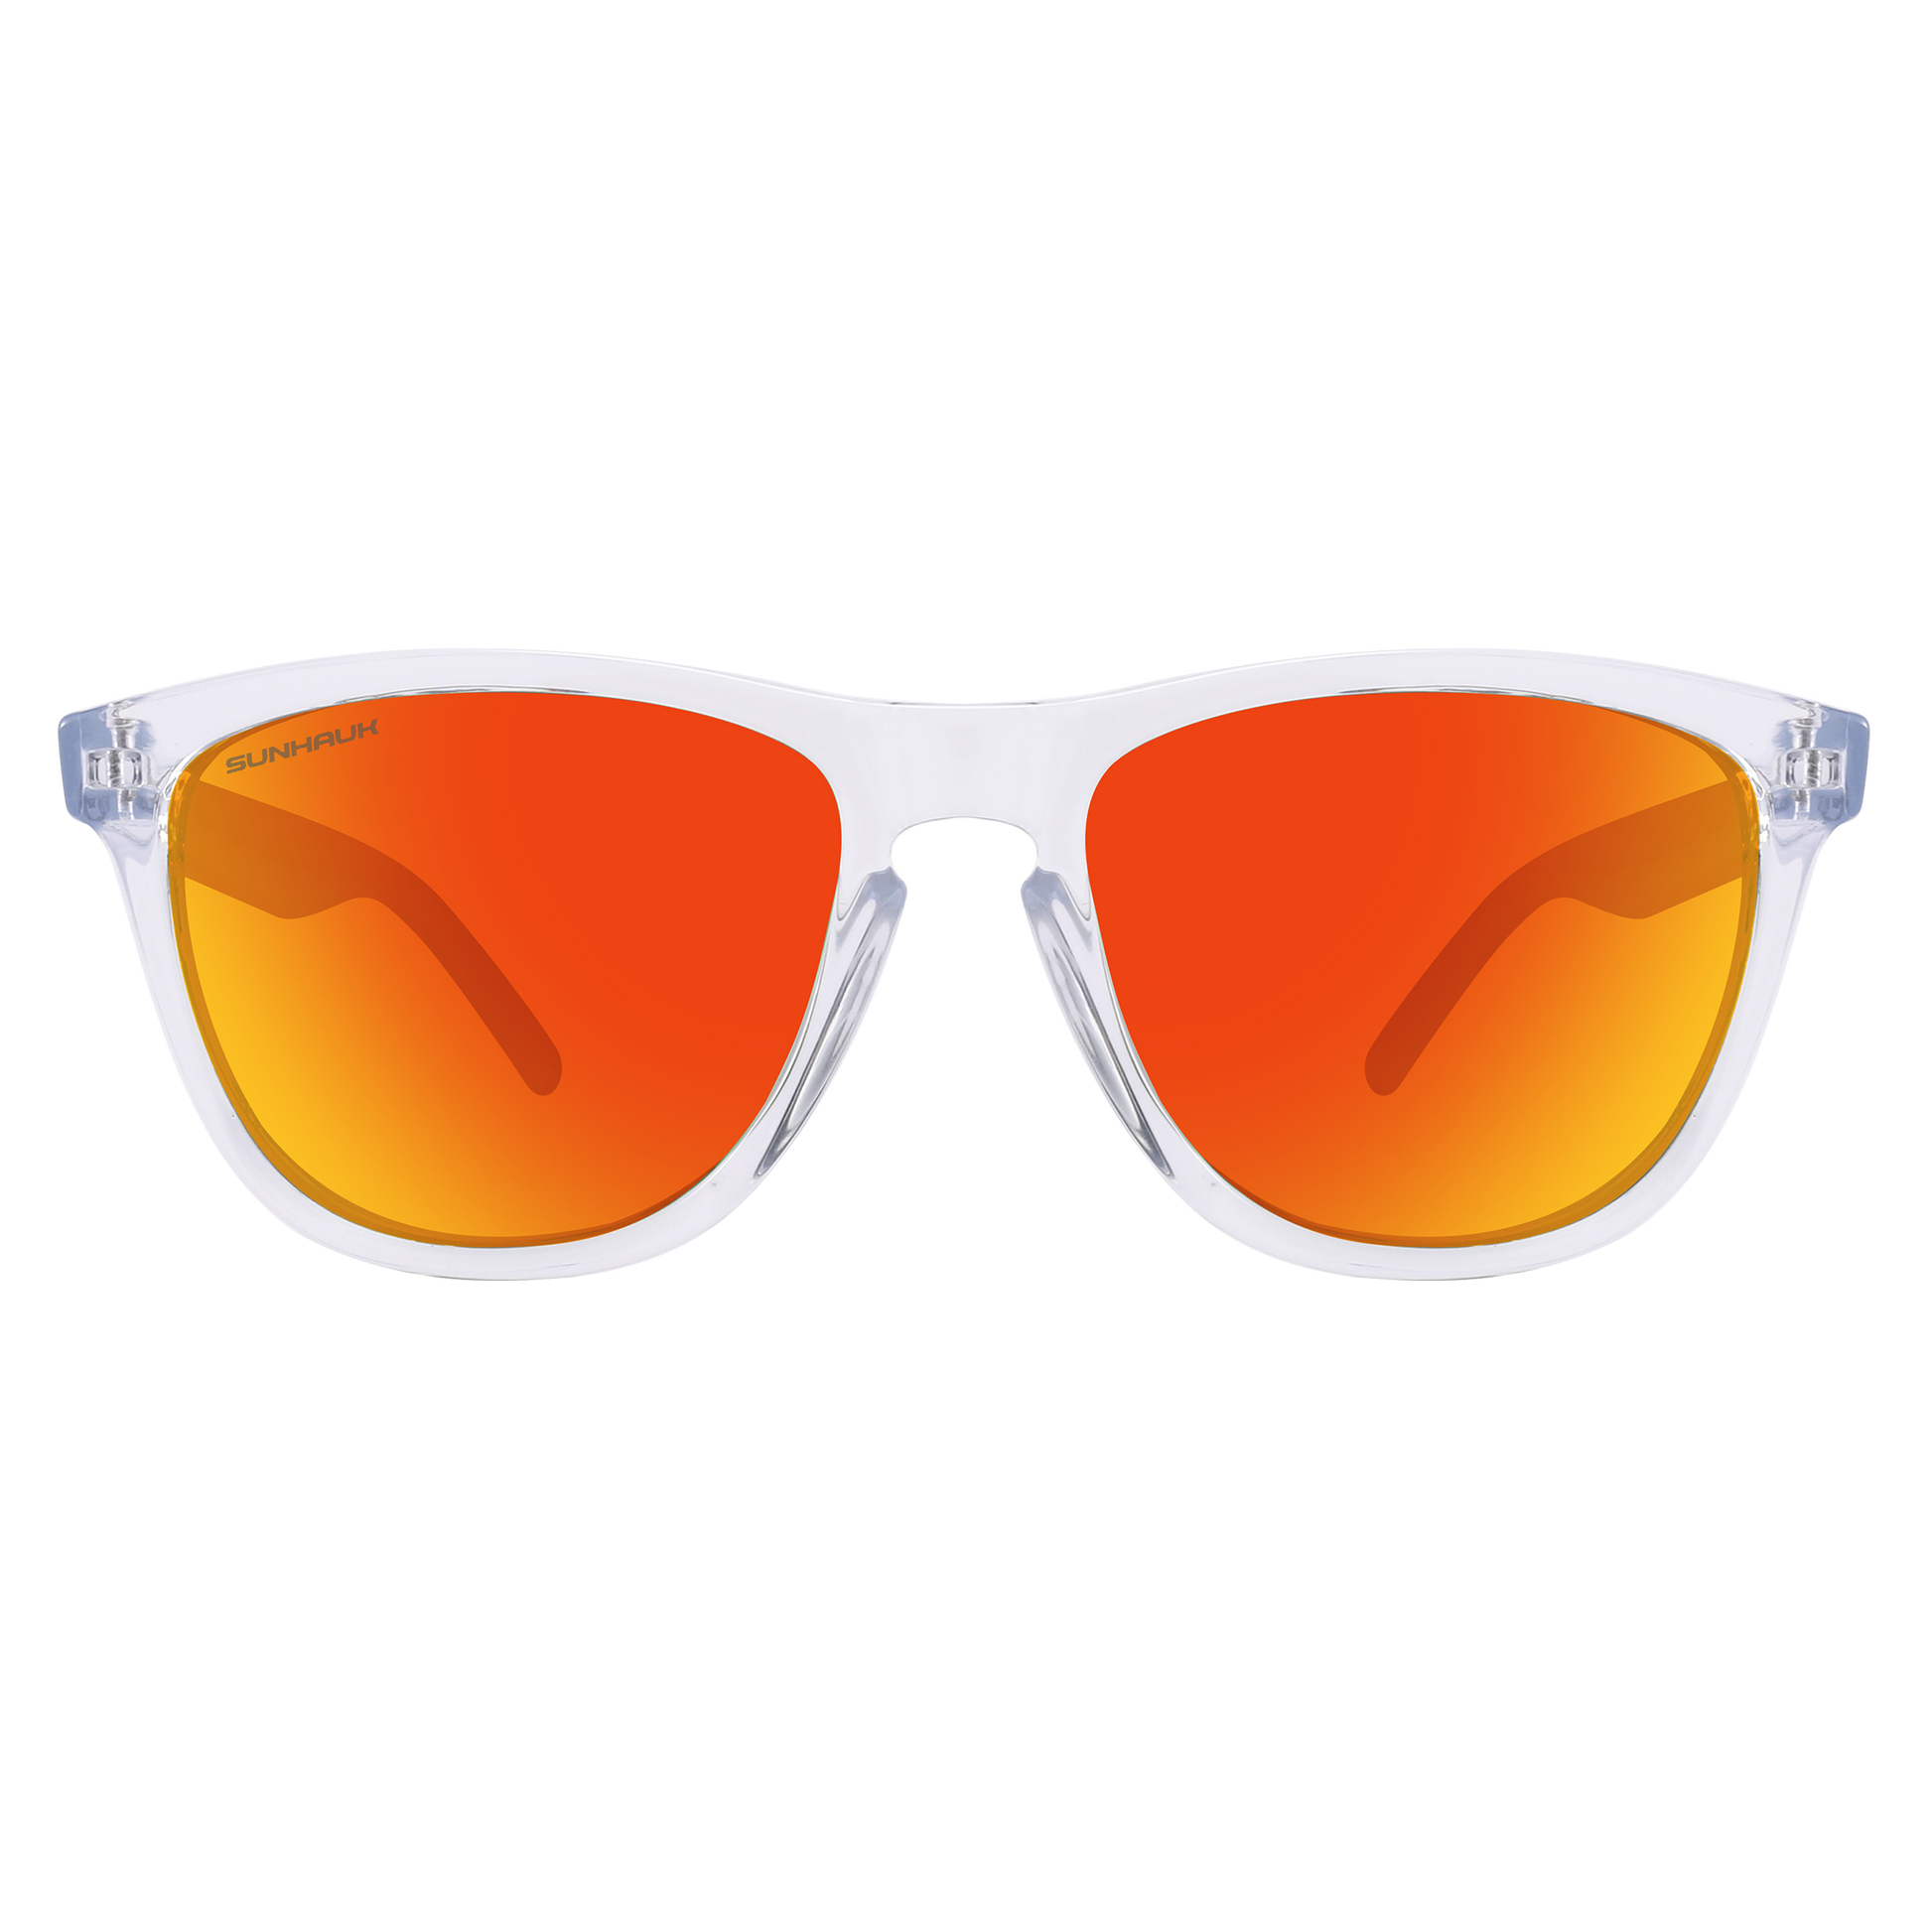 Sunset Lumina - Scratch Proof Clear Frame Sunglasses | SUNHAUK